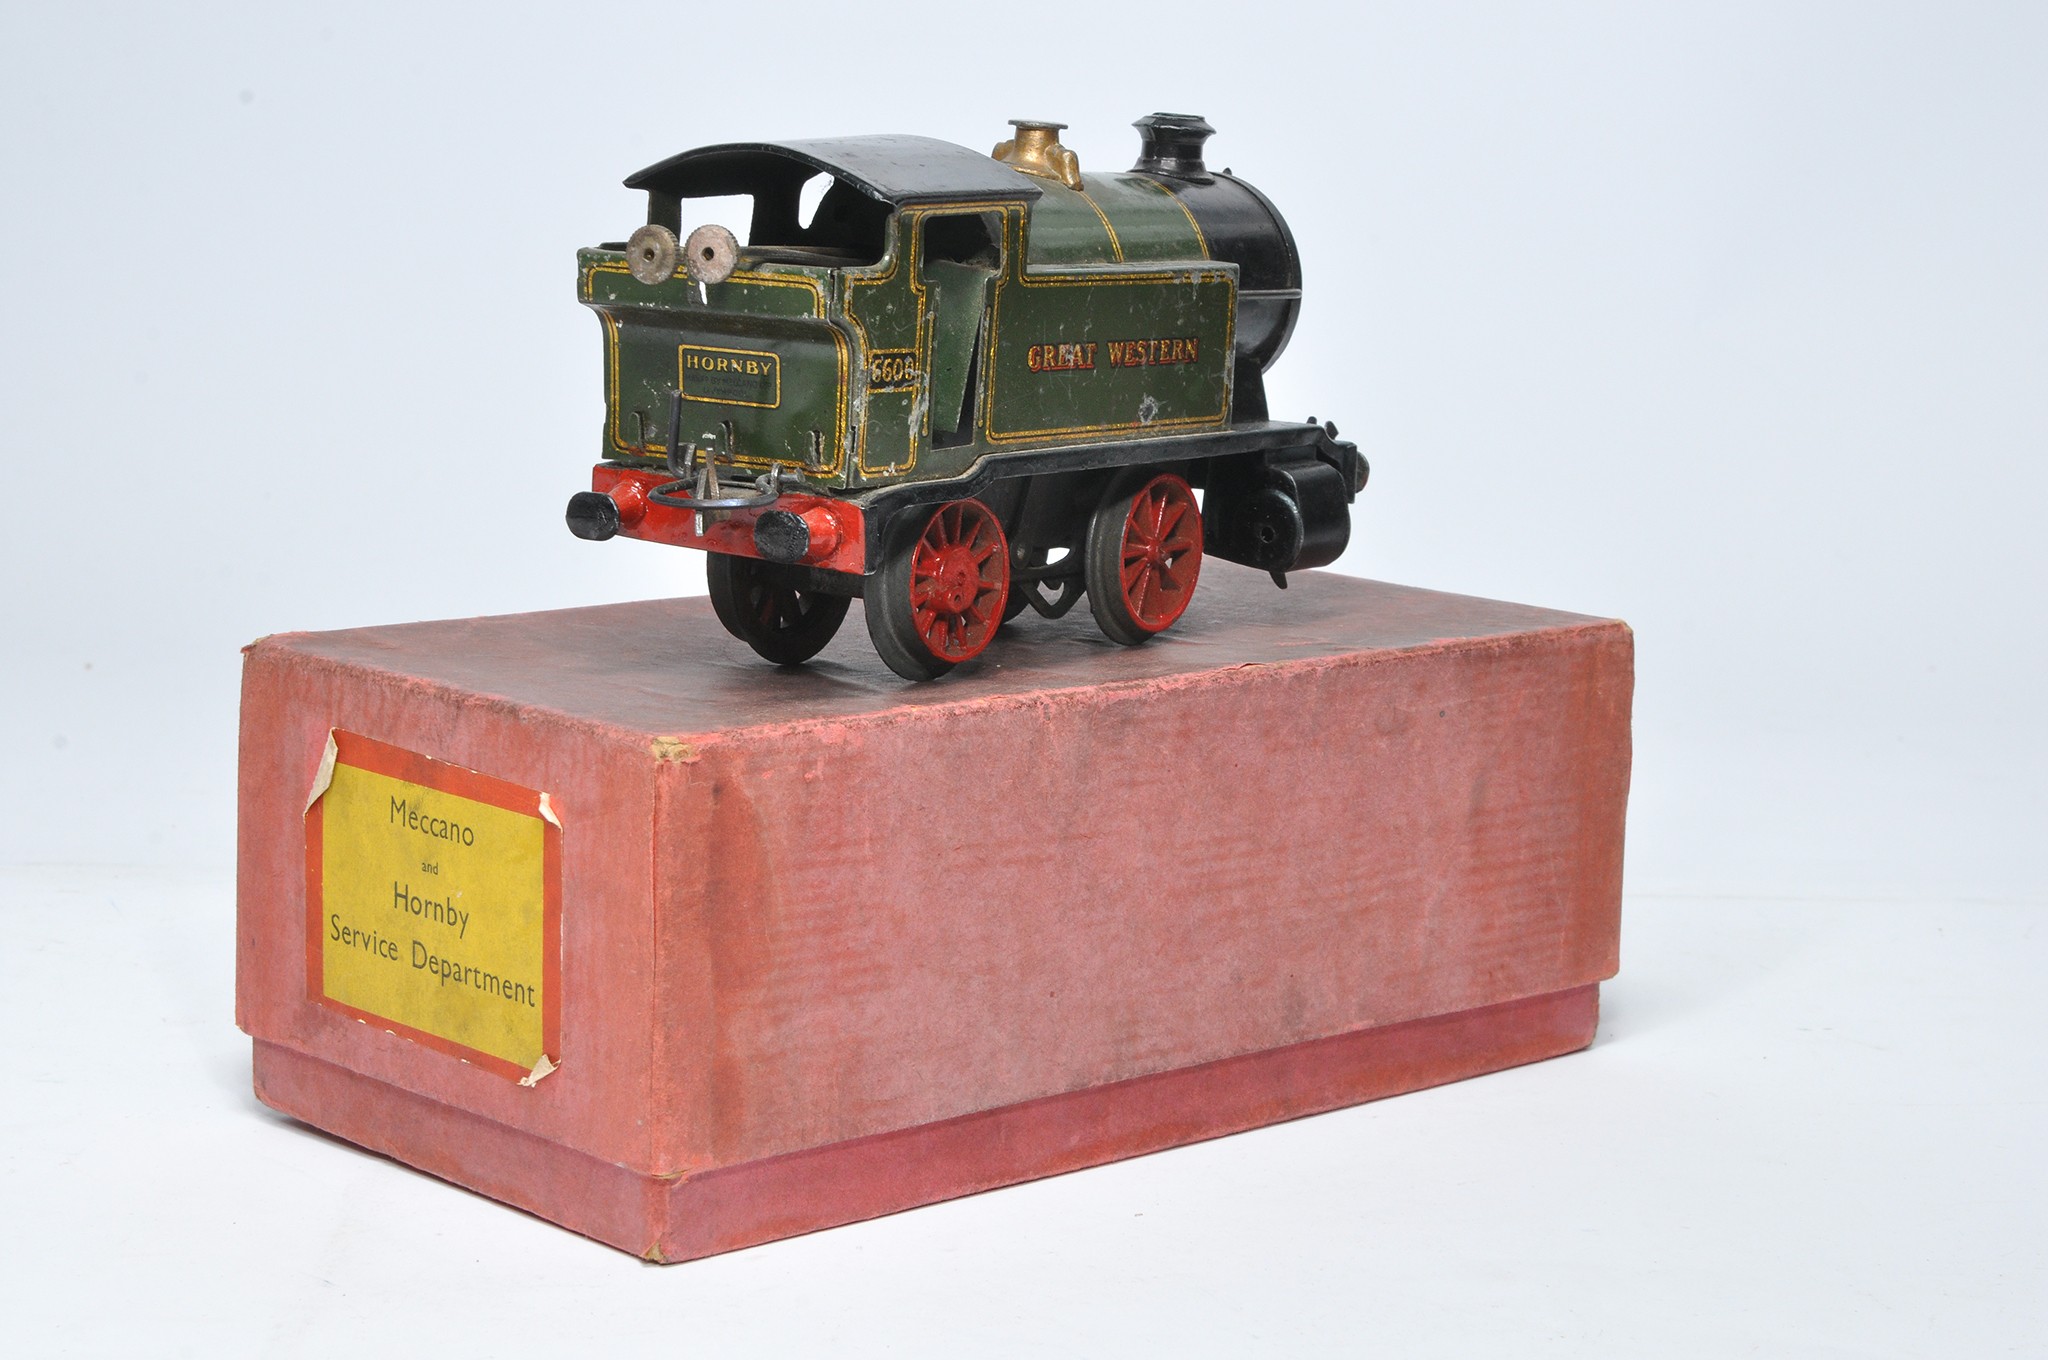 Hornby O Gauge Model Railway comprising Tank Locomotive, Great Western, No. 6600. Displays generally - Image 2 of 2